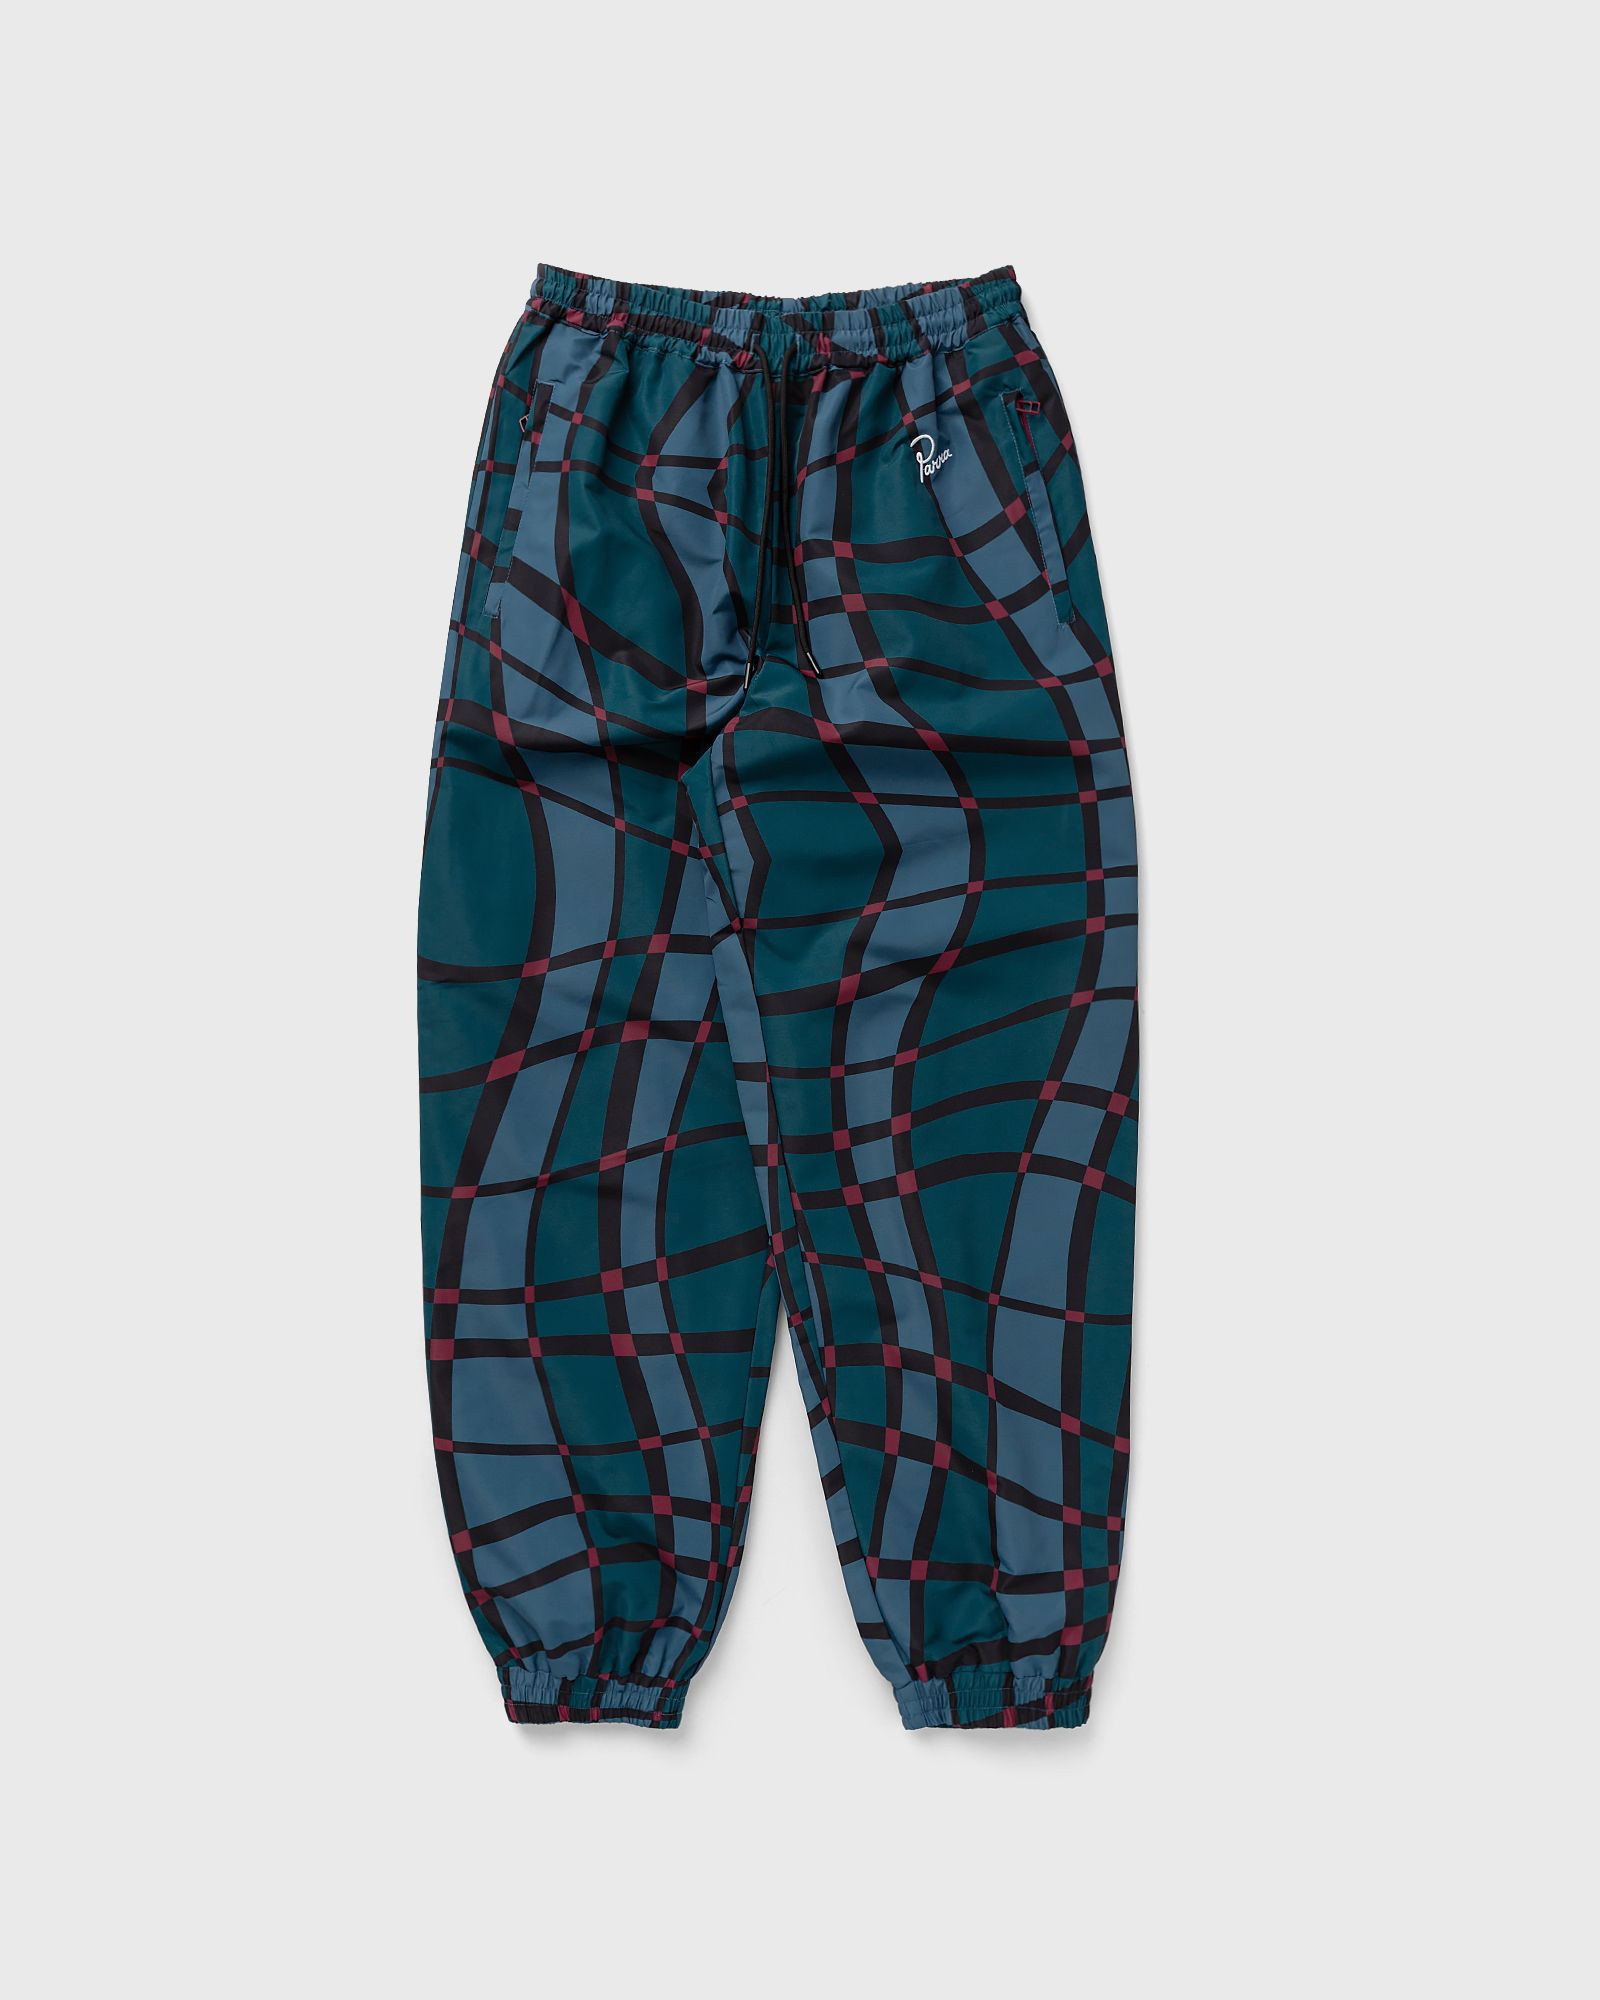 By Parra - squared waves pattern track pants men track pants green in größe:l